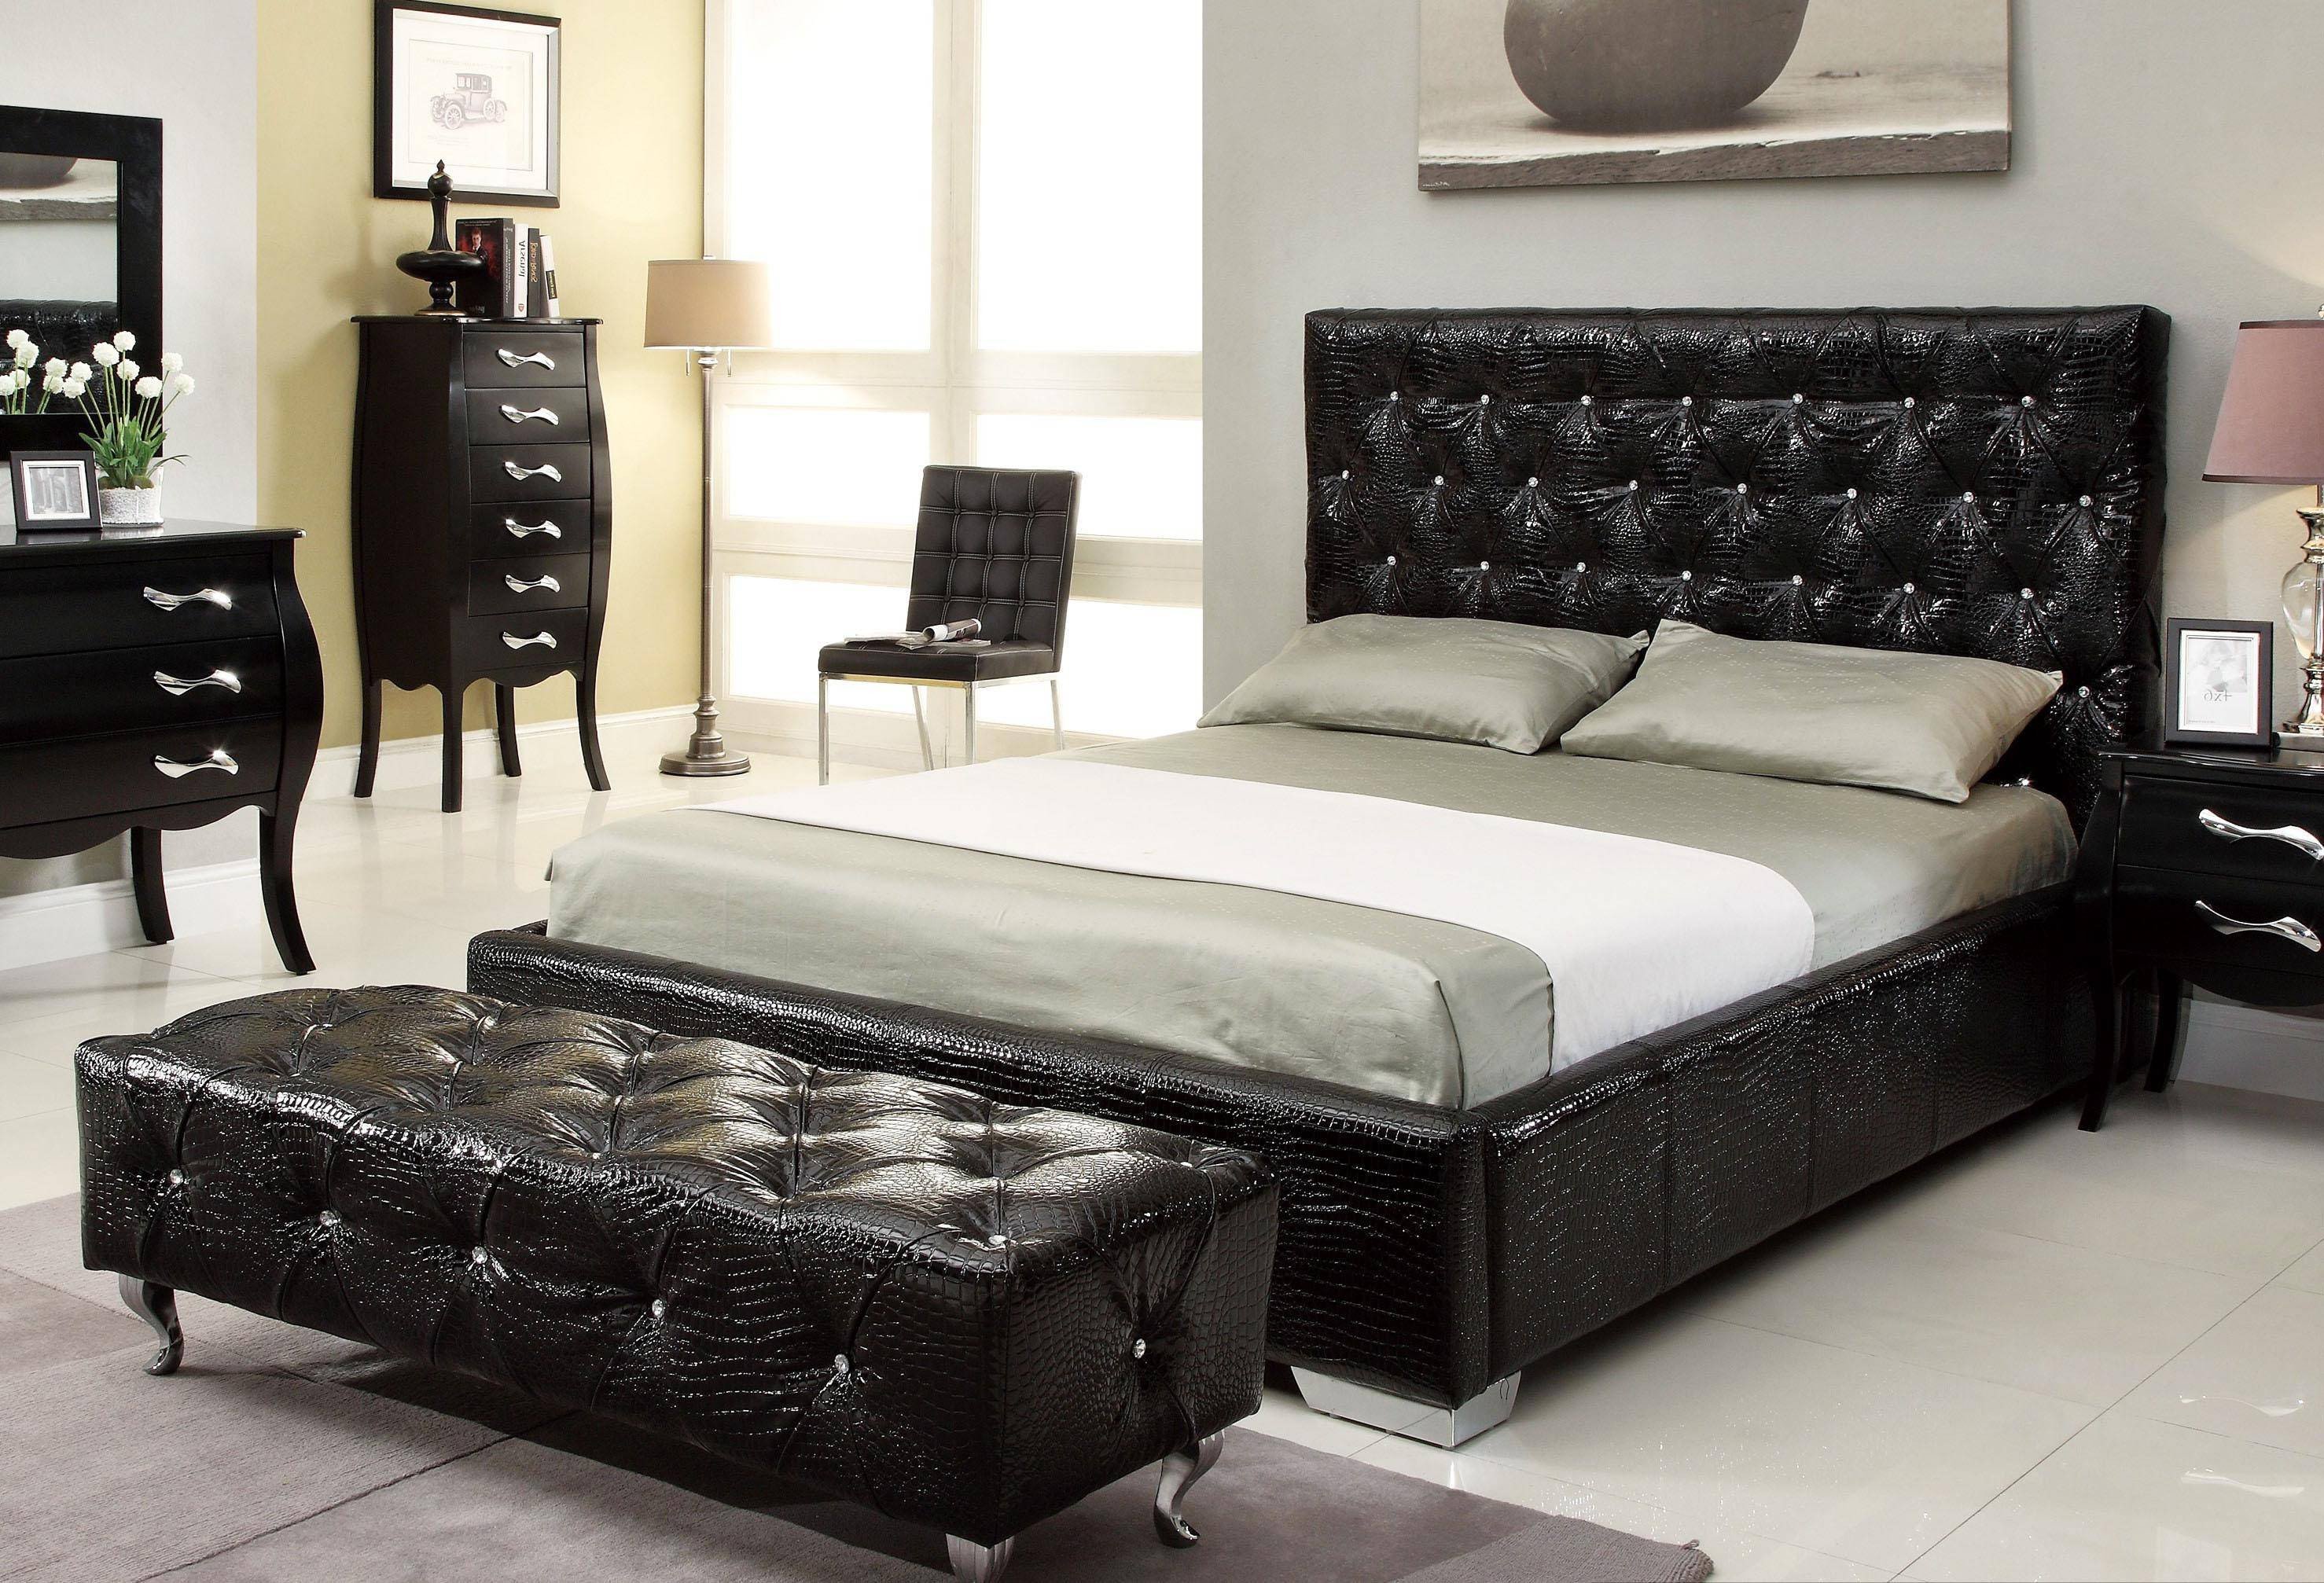 20 New Dark Wood Bedroom Set | Findzhome